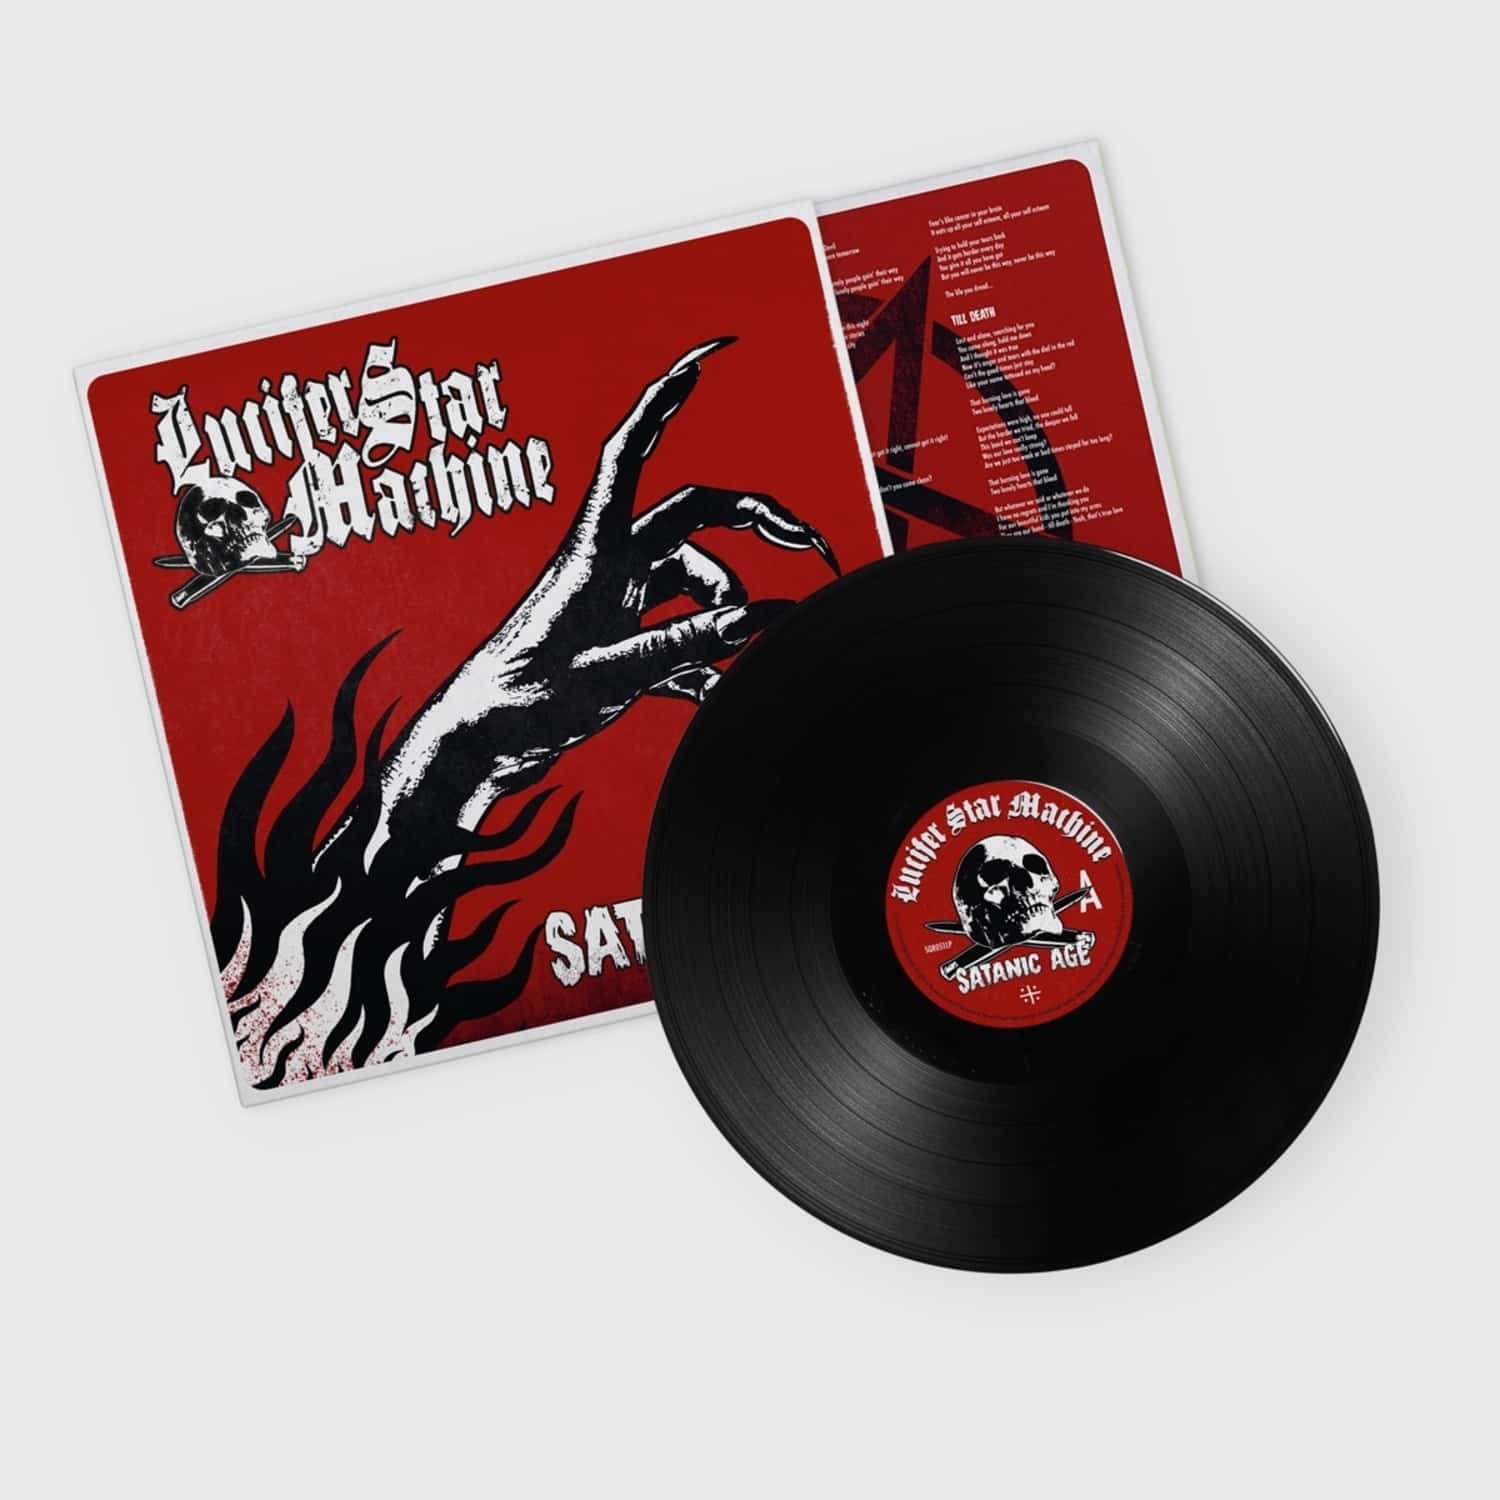 Lucifer Star Machine - SATANIC AGE 